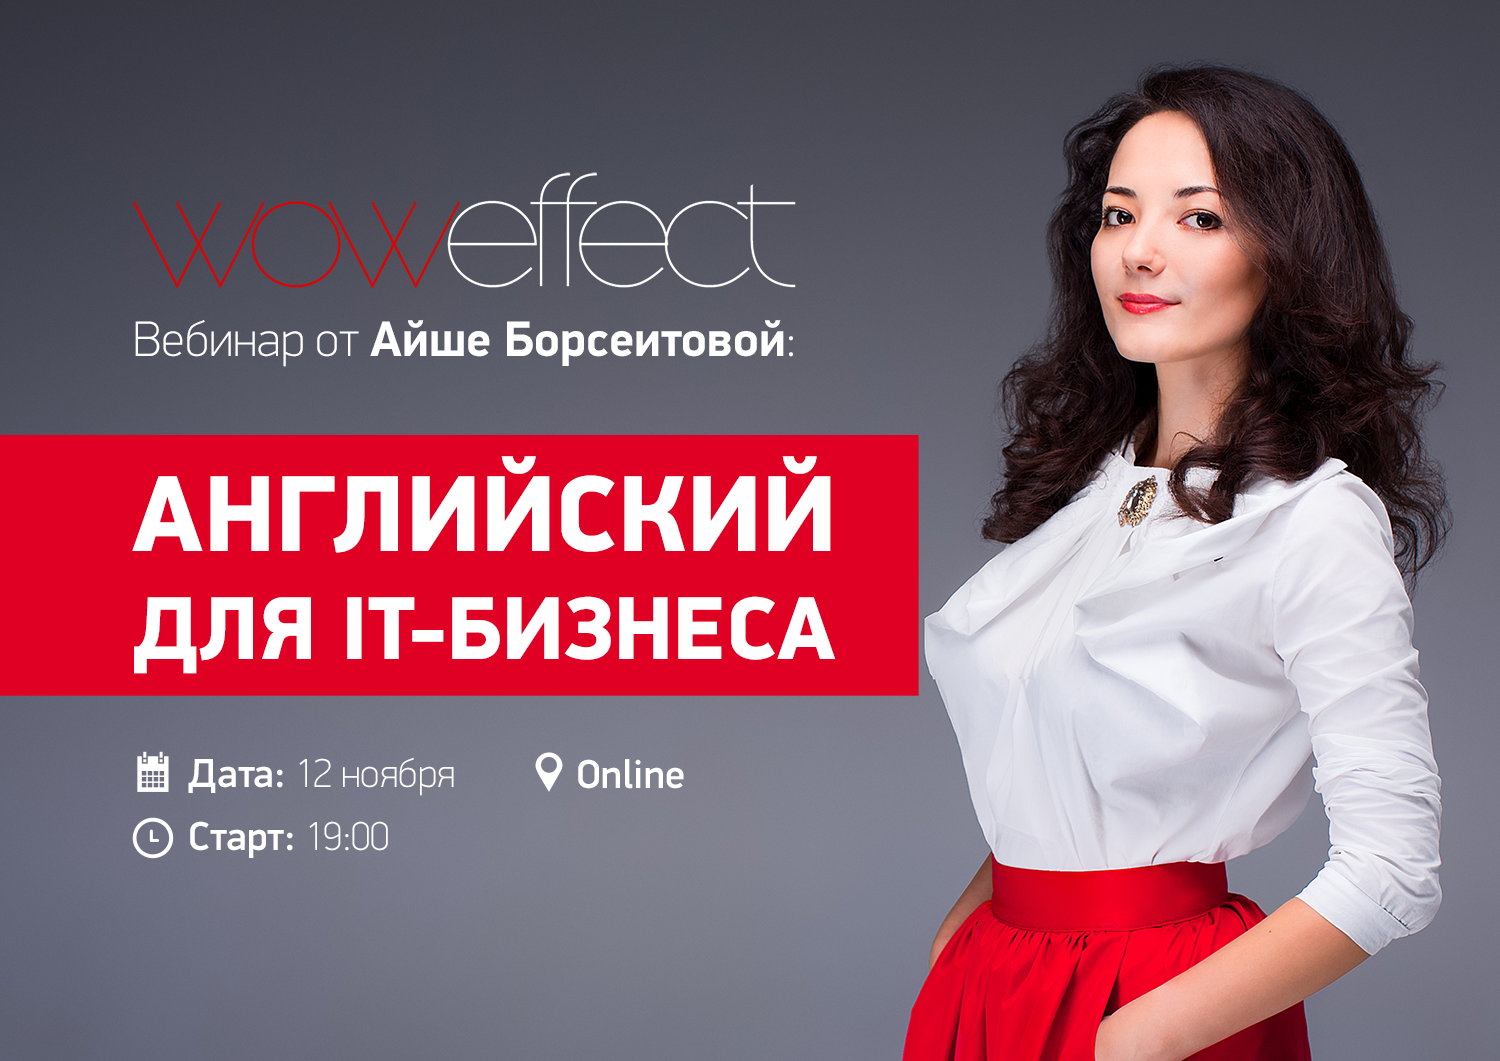 Айше Борсеитова - английский для IT-бизнеса